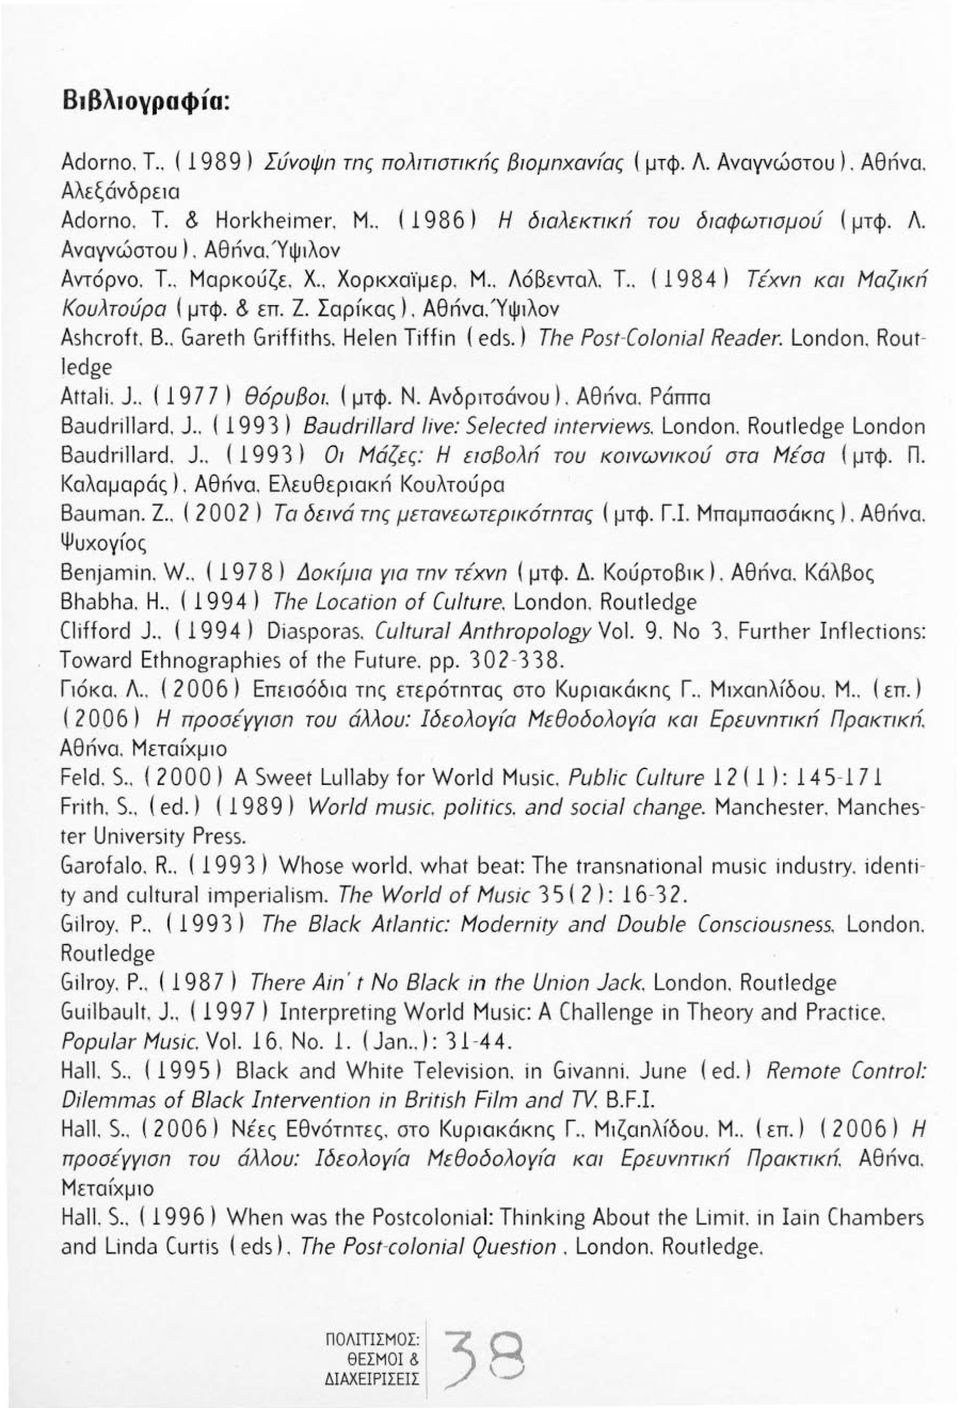 ) The Post-Colonial Reader. London. Routledge Attali. J.. ( 19 7 7 ) θόρυβοι. ( μτφ. Ν. Ανδρπσάνου). Αθ n να. Ράππα Baudriard. J.. ( 19 9 3 ) Baudrillard live: Selected interviews. London. Routledge Londo n Baudriard.